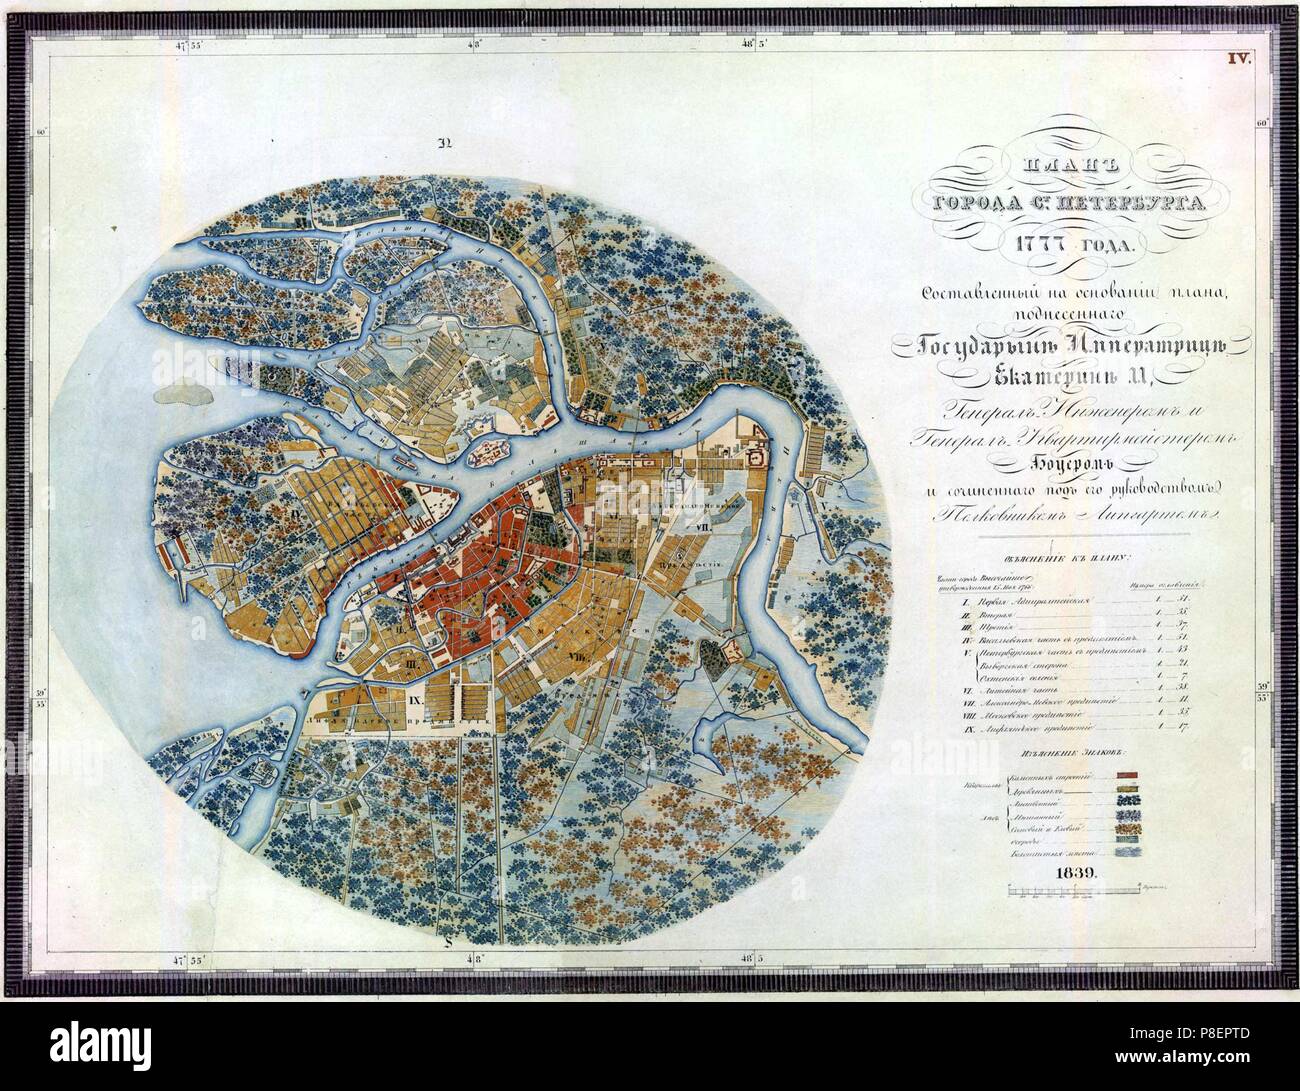 Karte von Petersburg. Museum: Staatliche Eremitage, St. Petersburg  Stockfotografie - Alamy